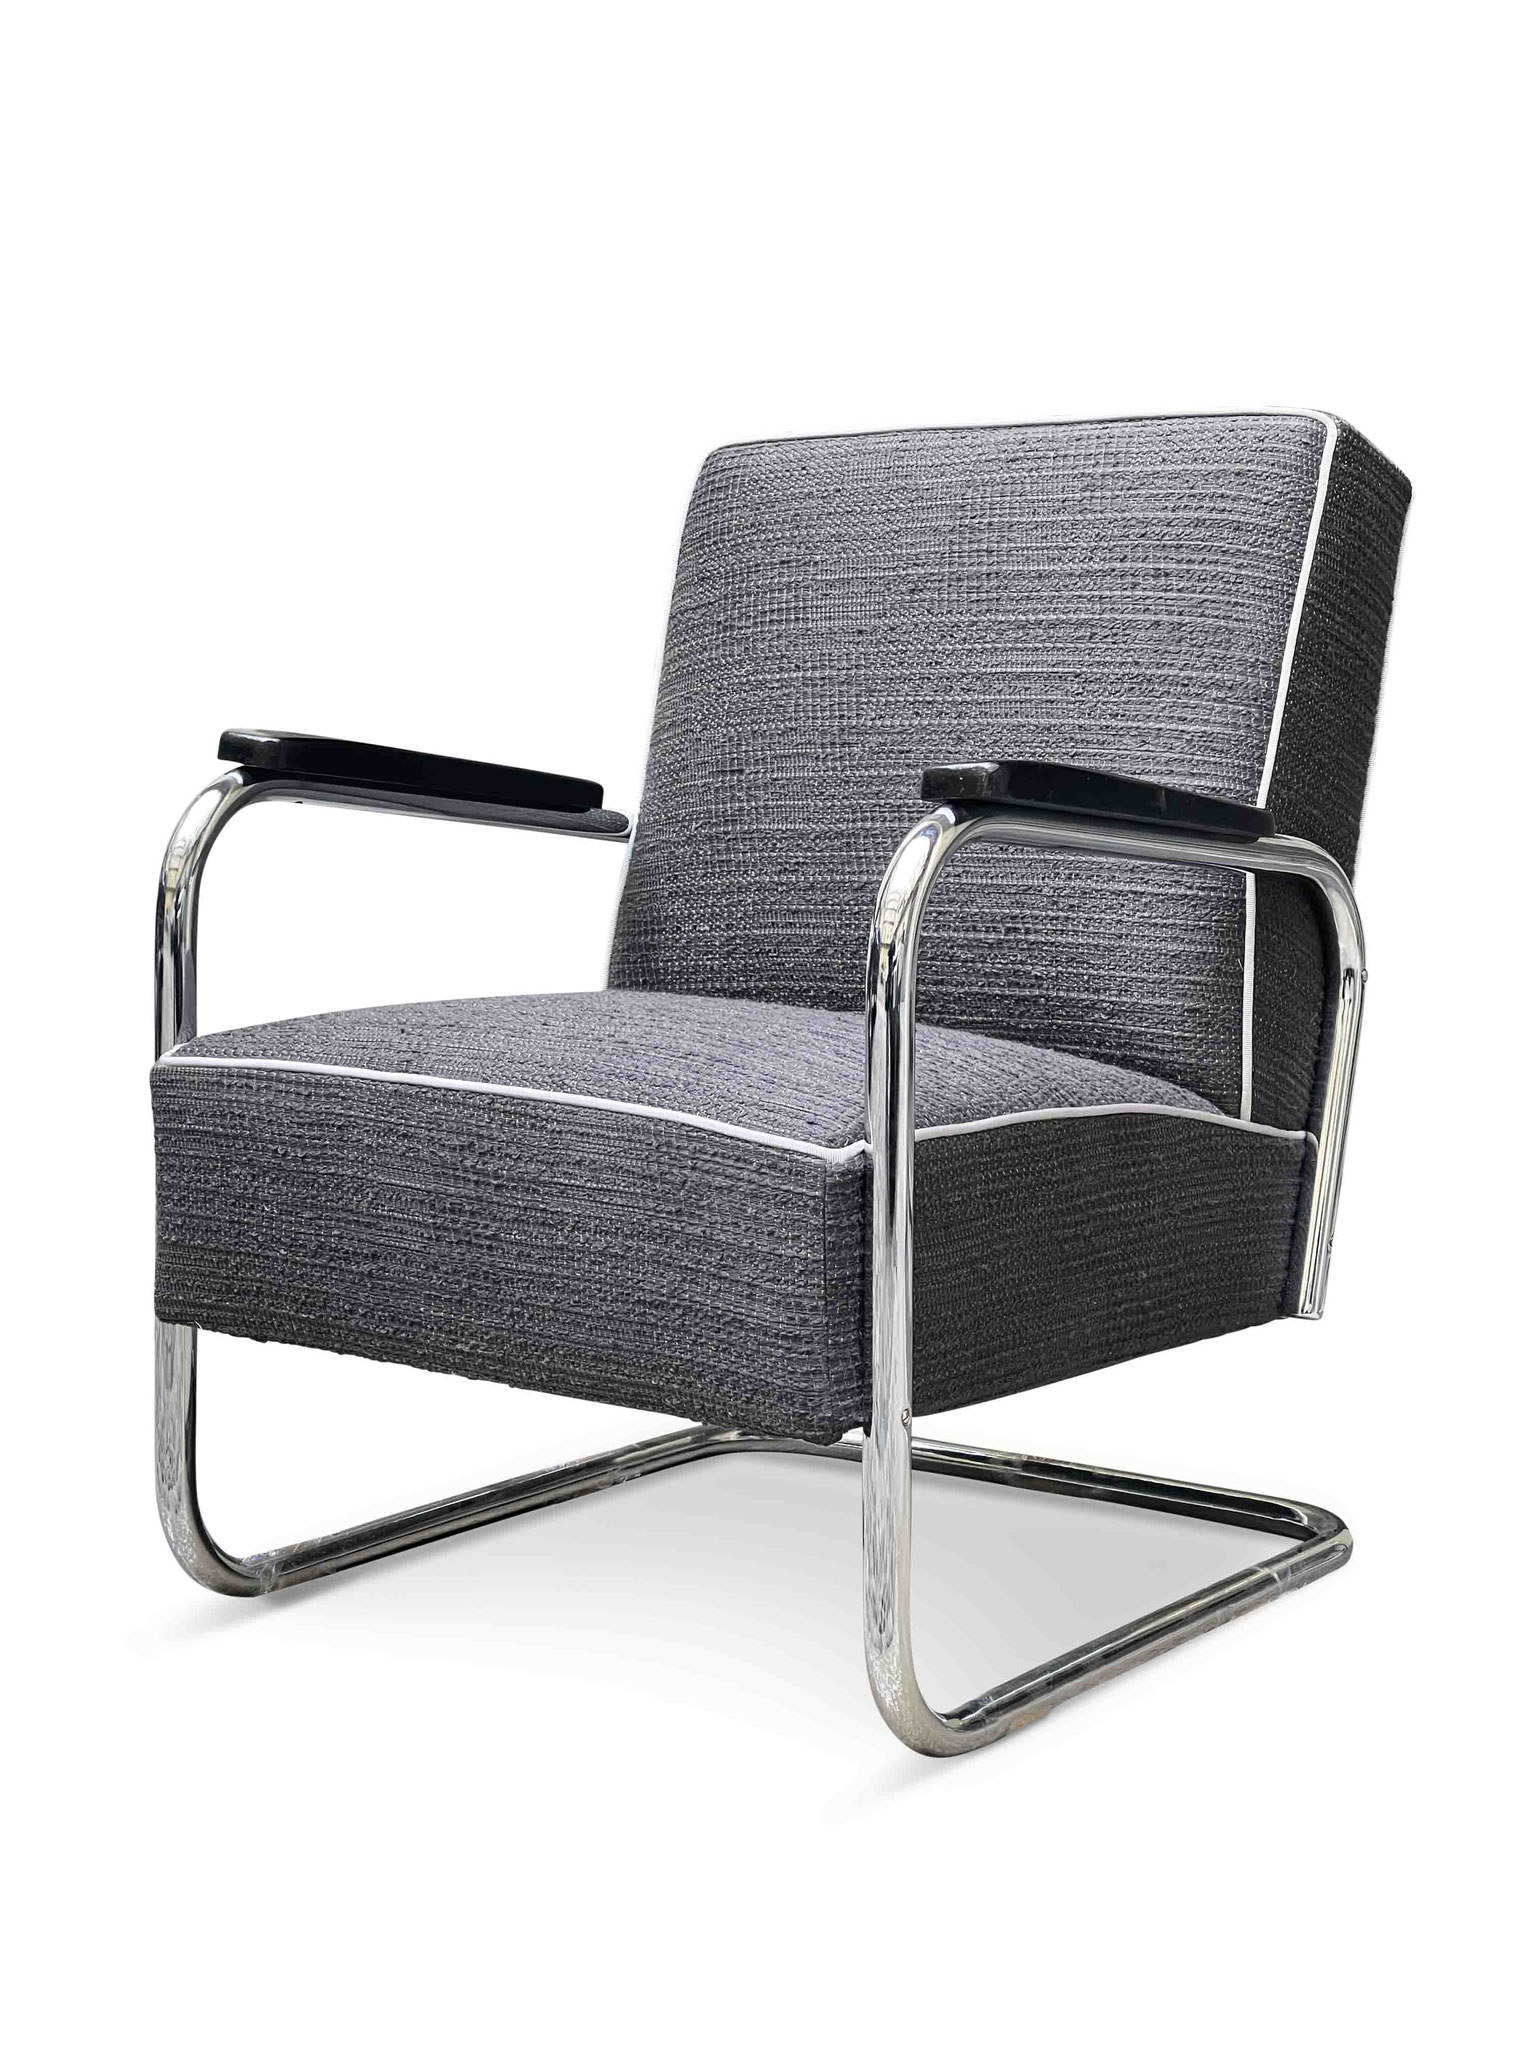 Mid century chrome chair nyc